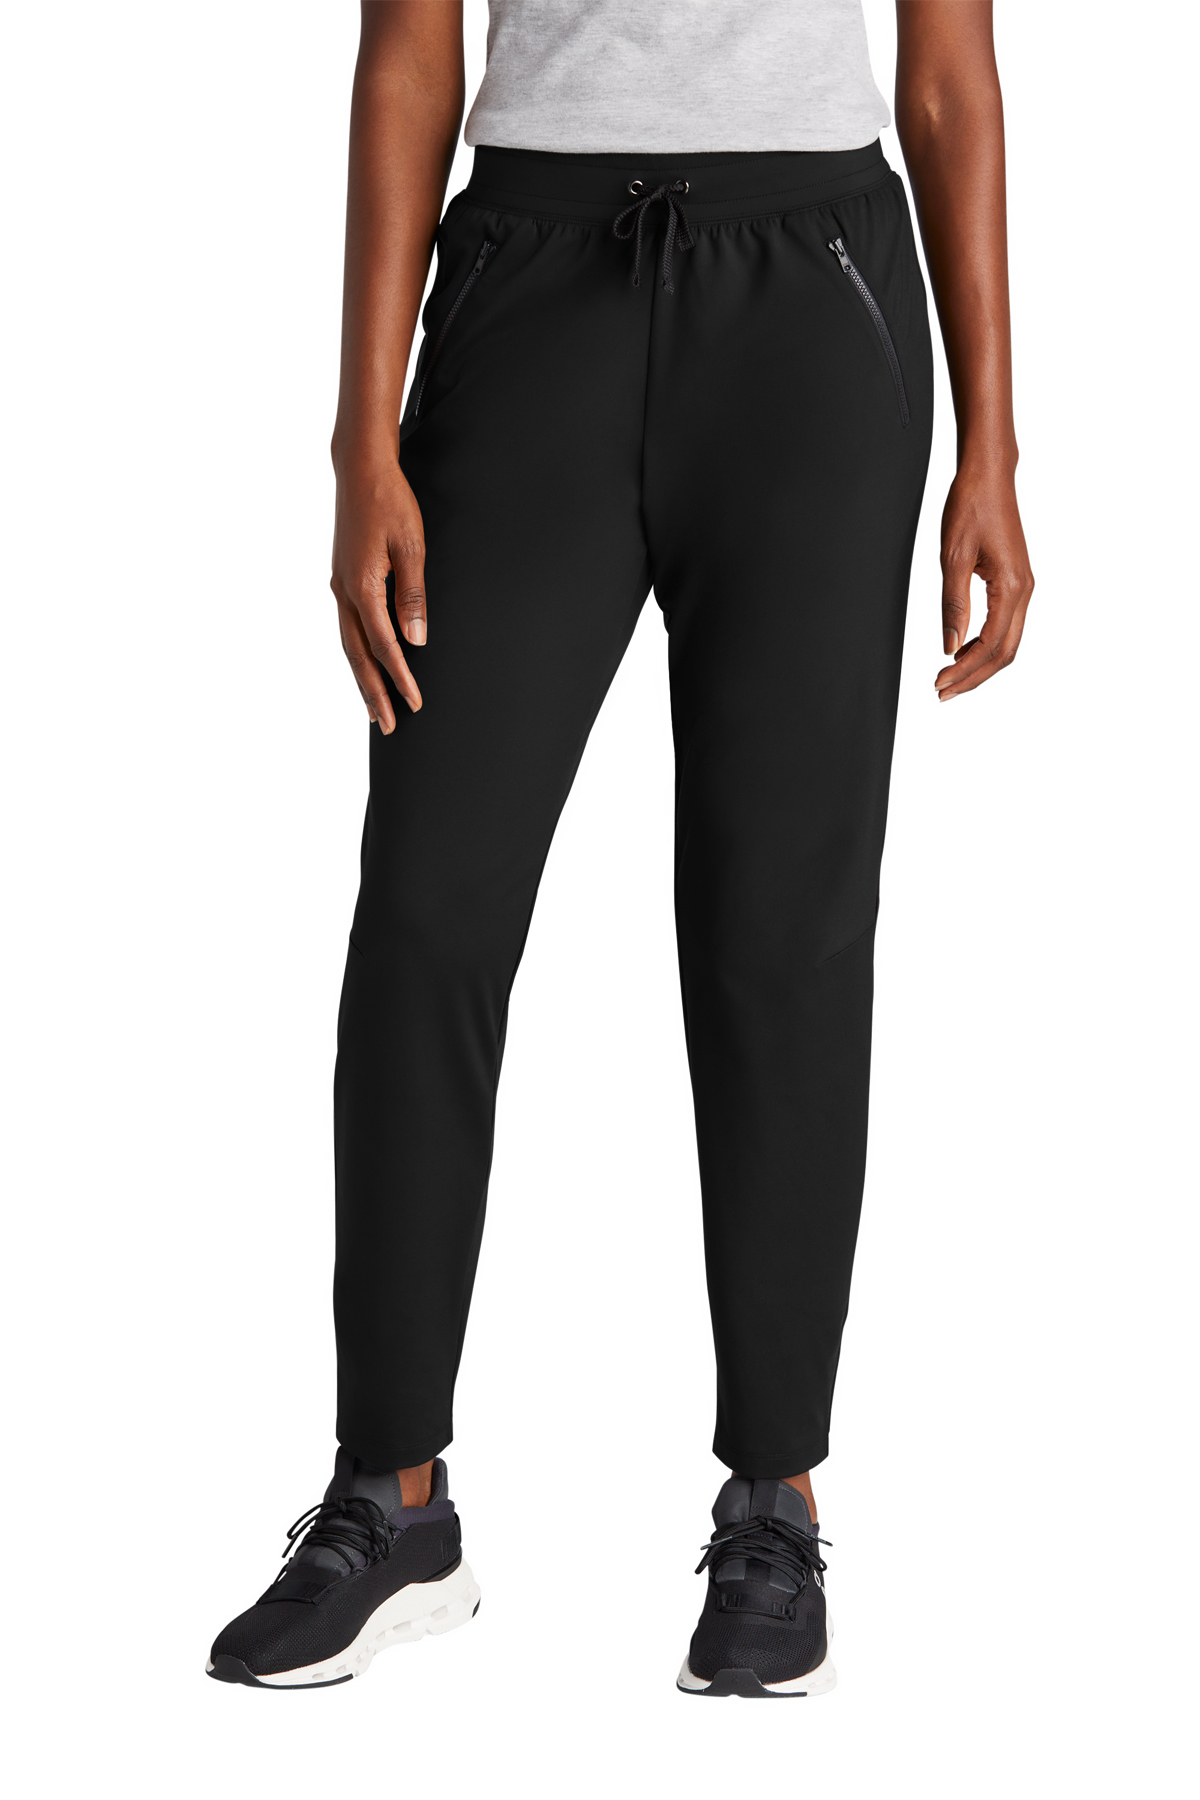 WICKFIT SPORTS Solid Women Black Track Pants